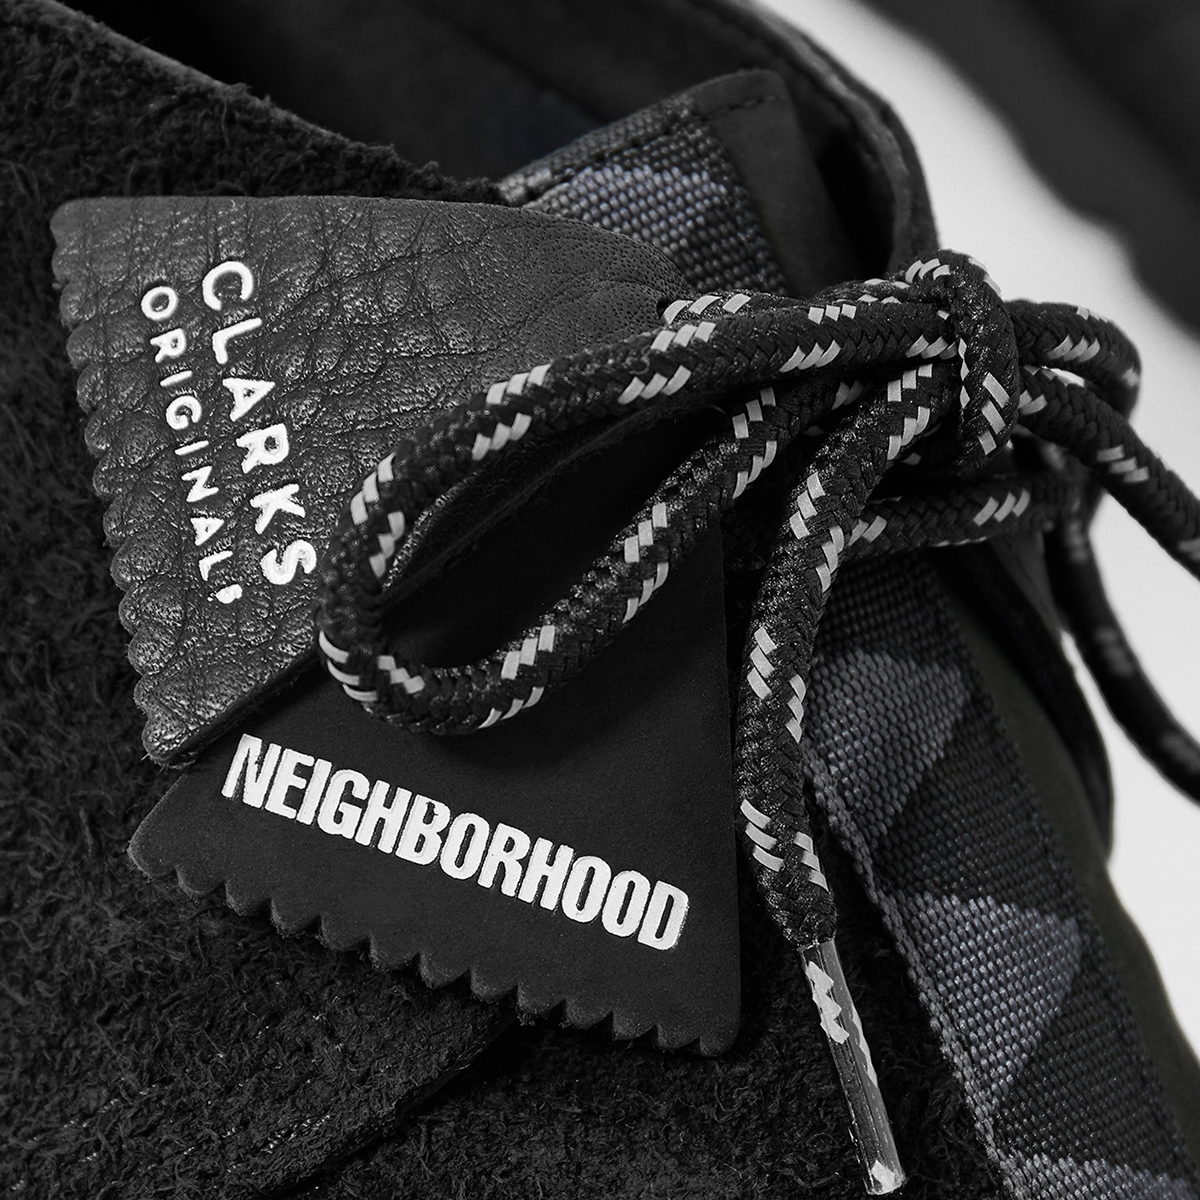 【低価大人気】CLARKS ORIGINALS × NEIGHBORHOOD GORE-TEX 靴